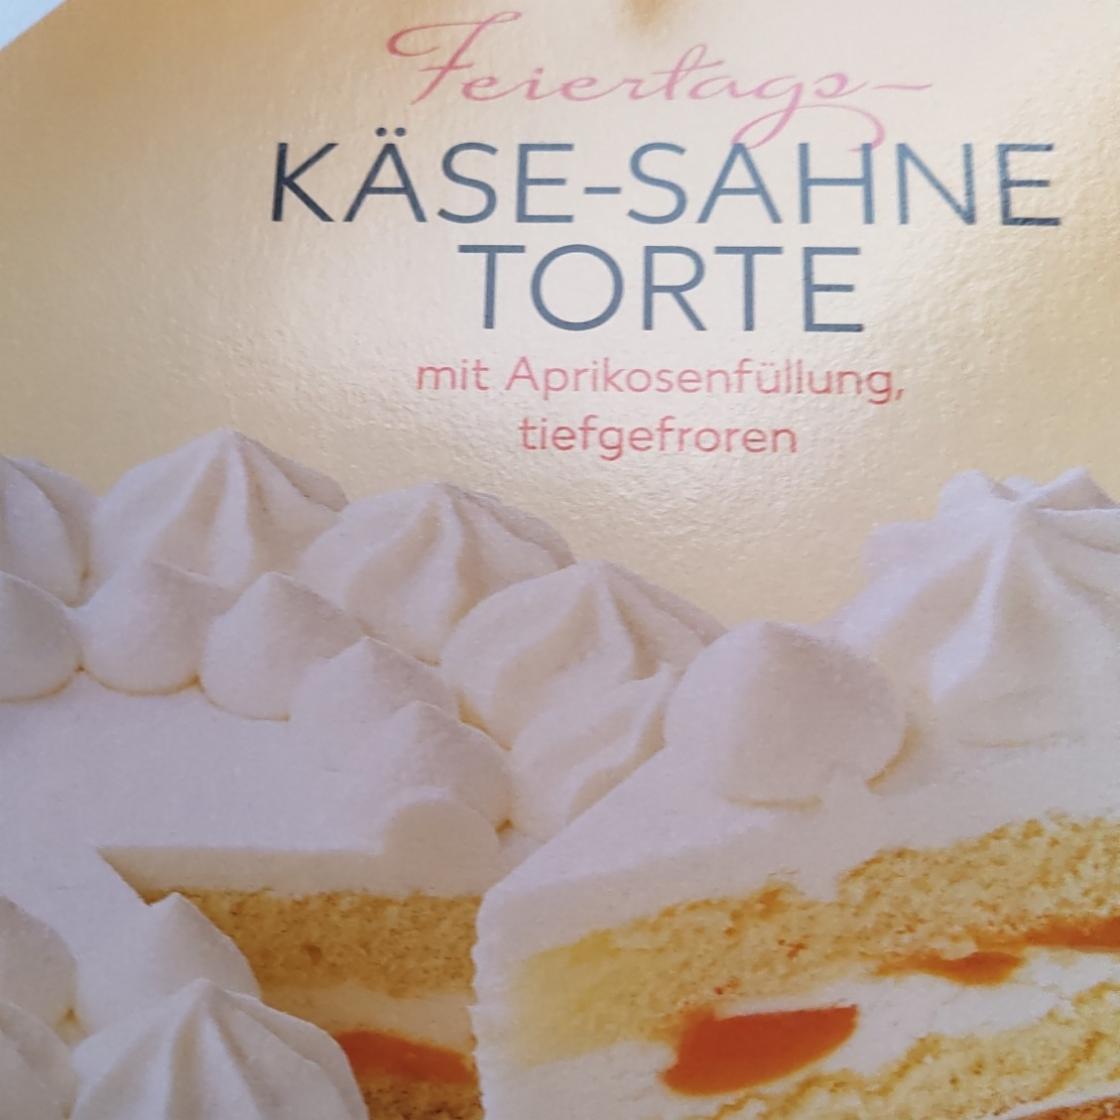 Фото - Käse-Sahne torte mit Aprikosenfüllung K-Classic